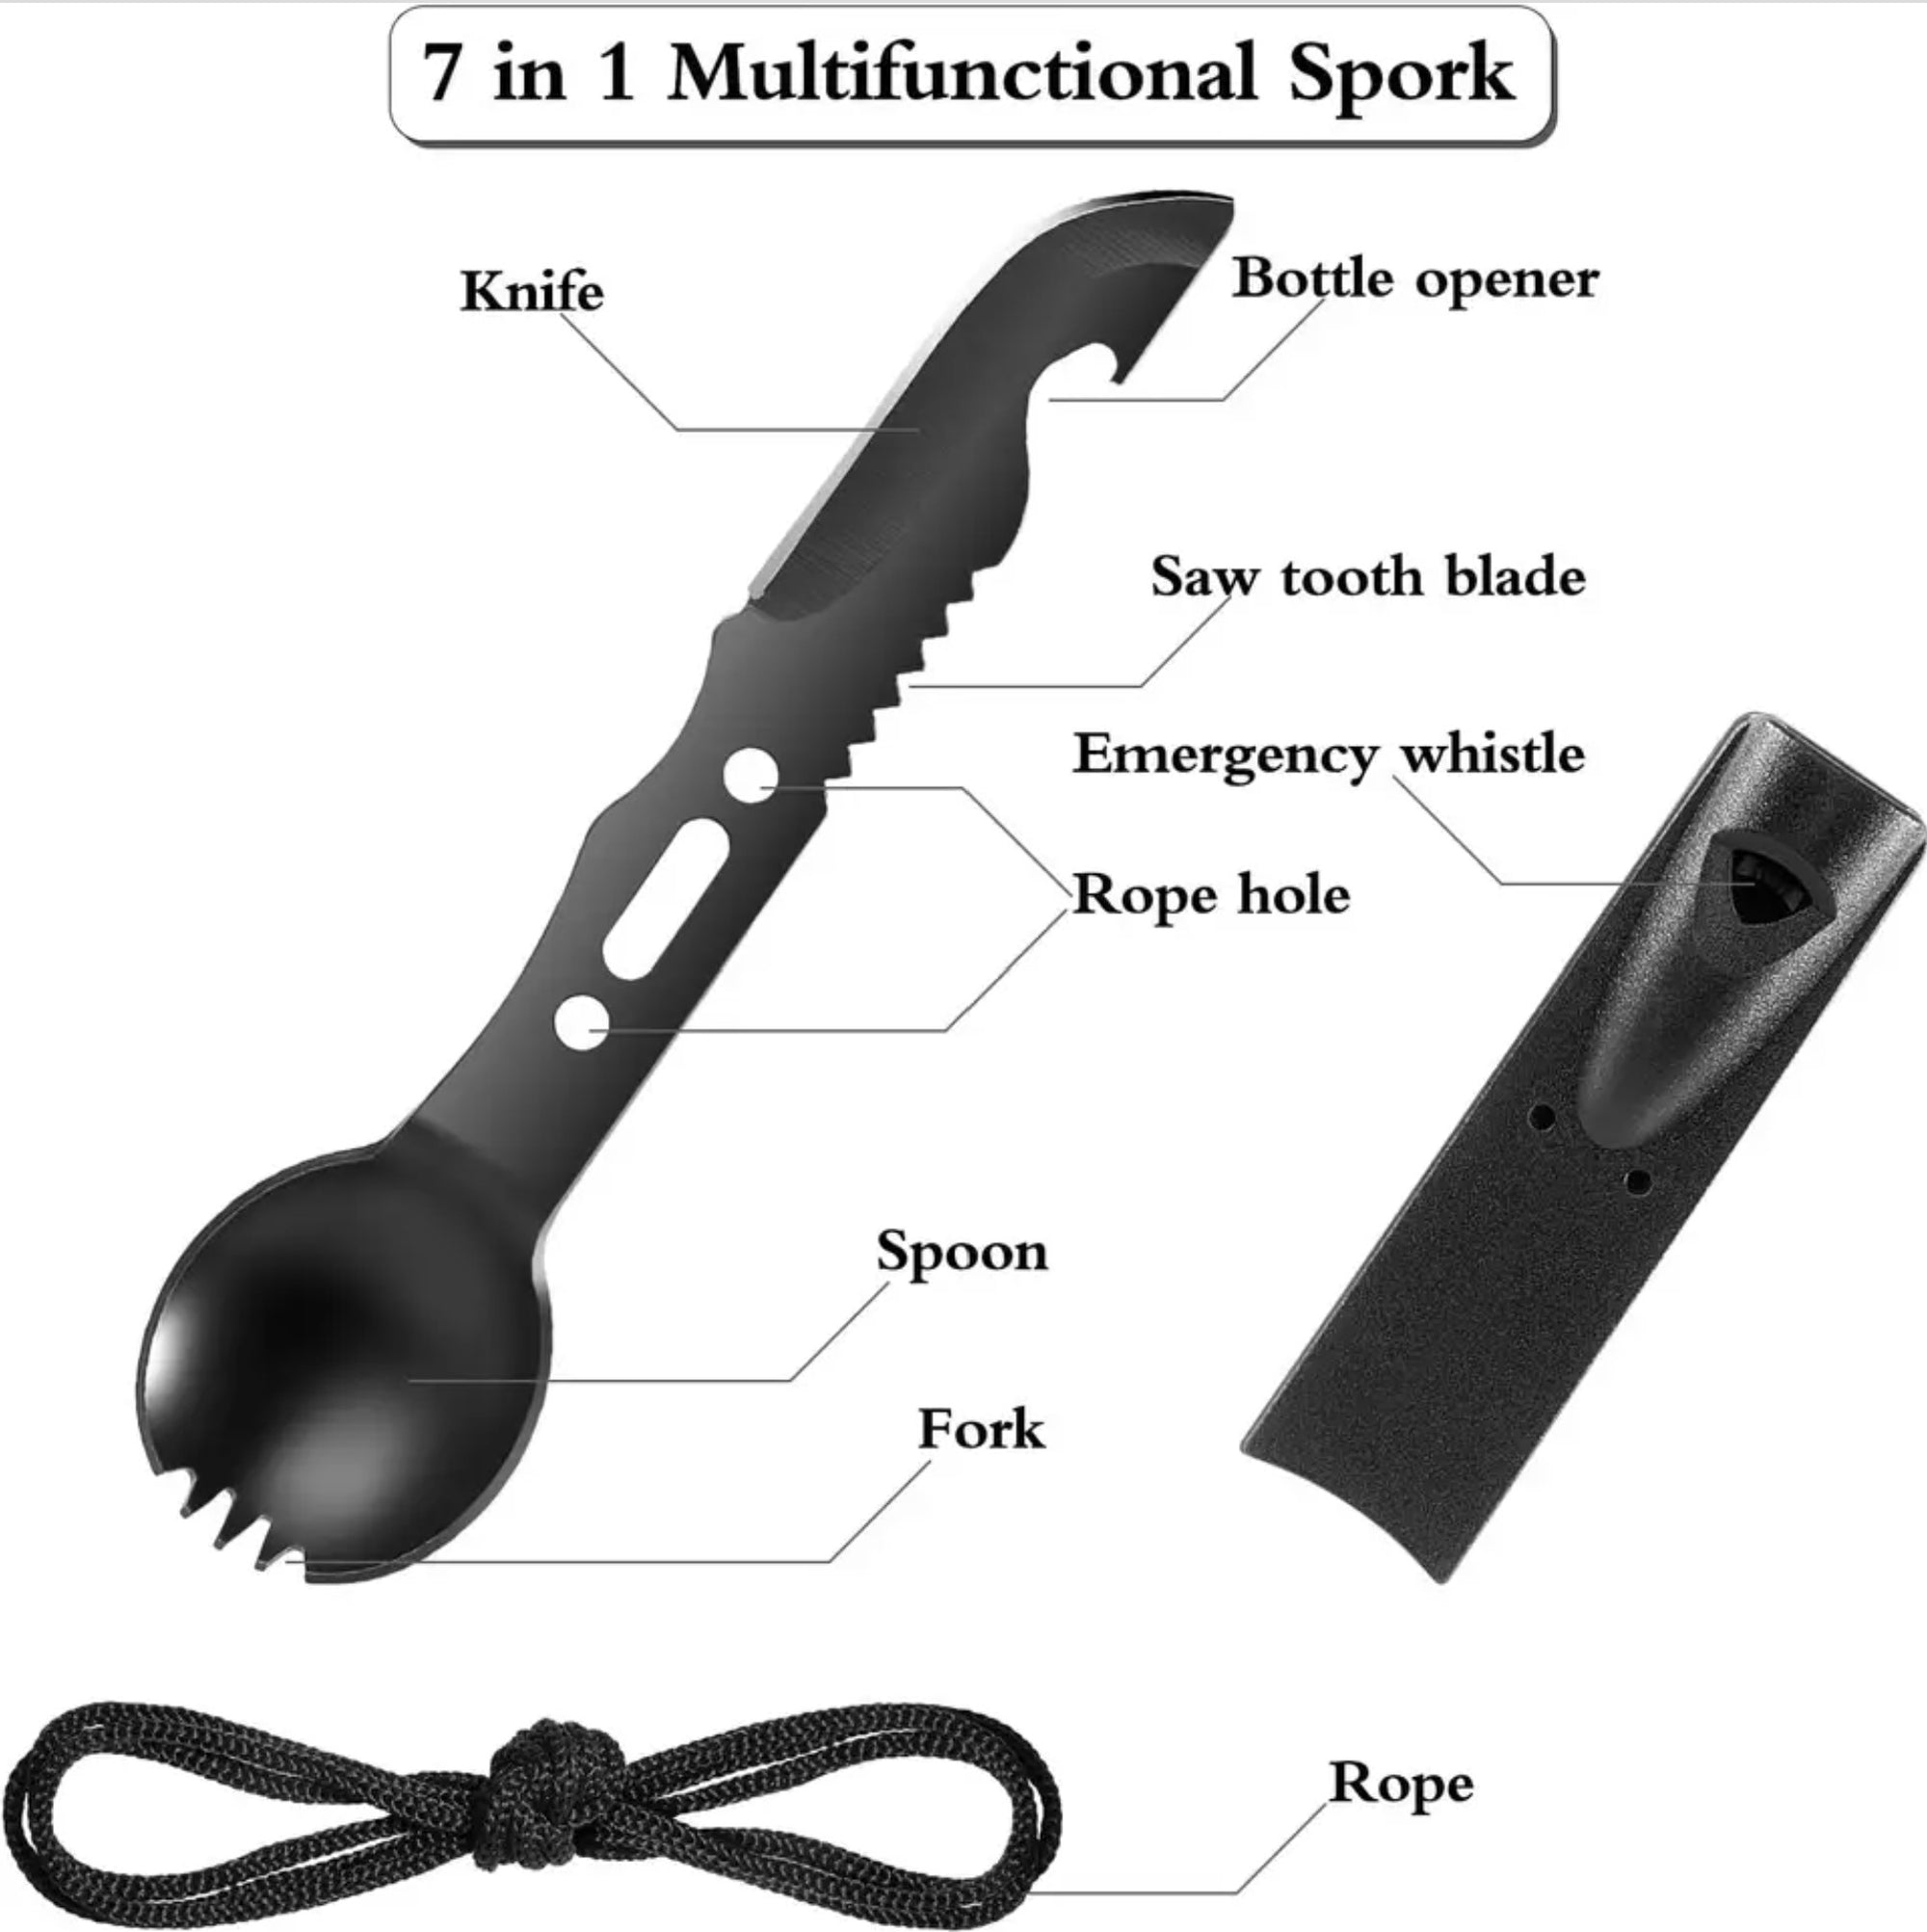 7 in 1 Multifunctional Spork / Knife